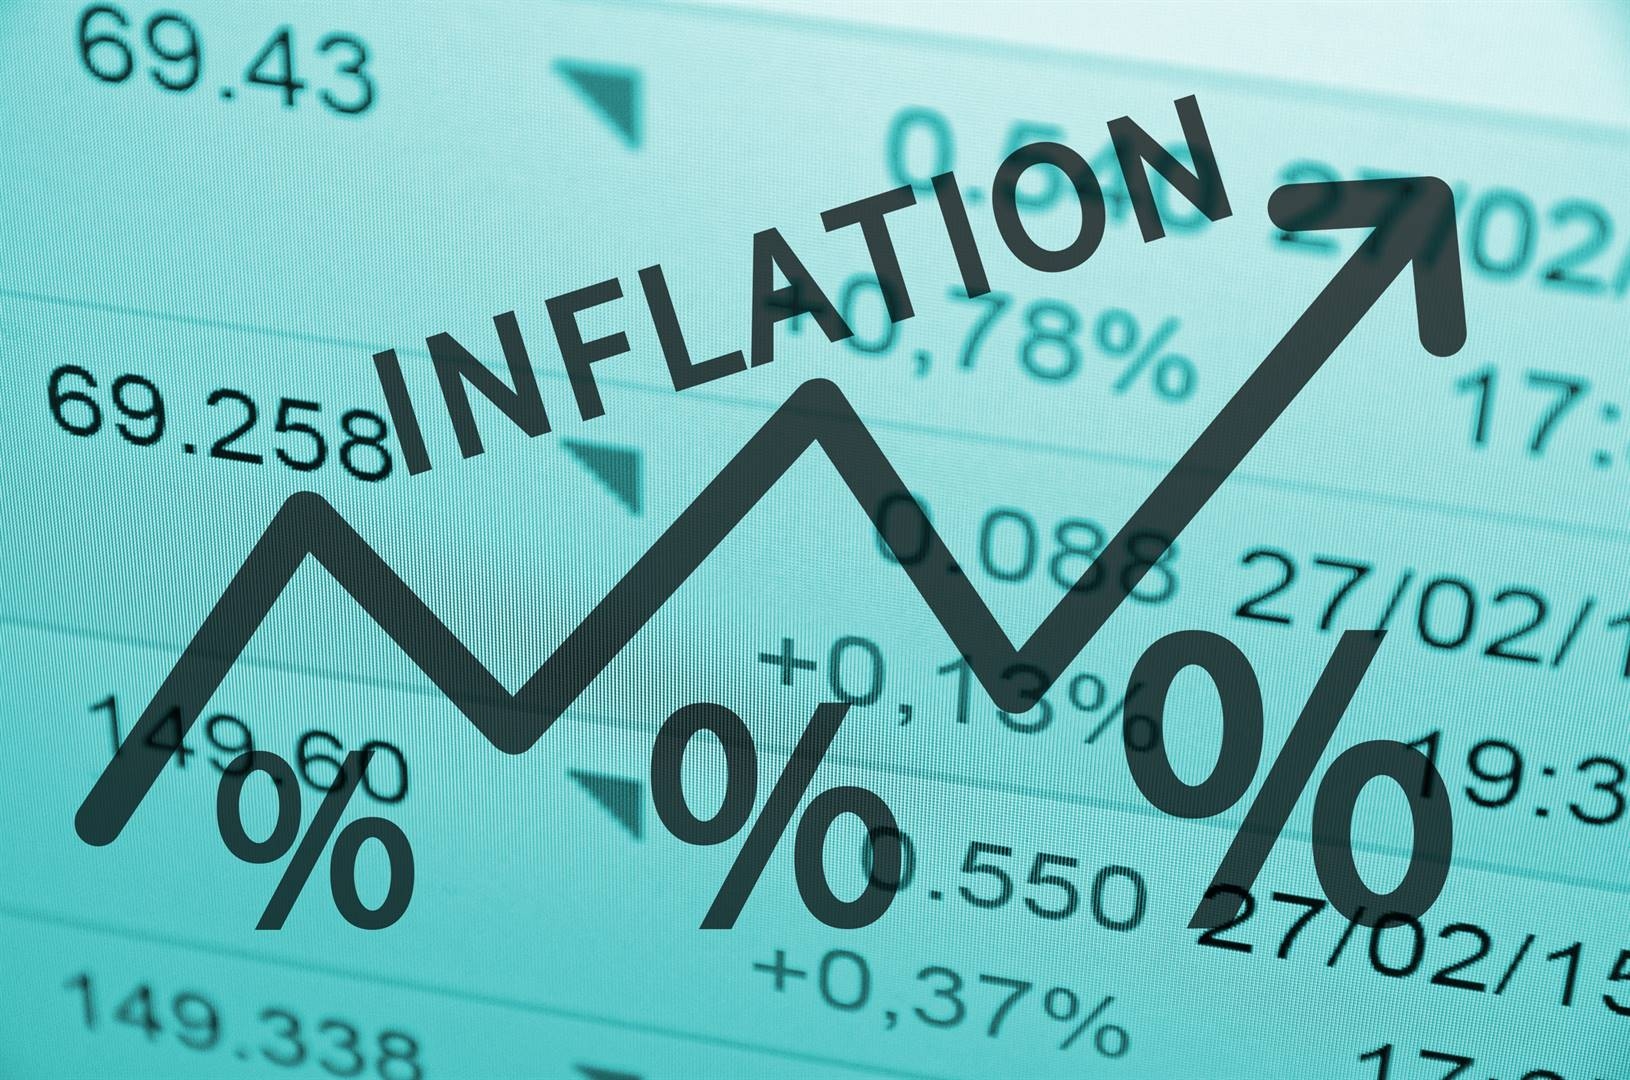 Inflation target set at 5.5%